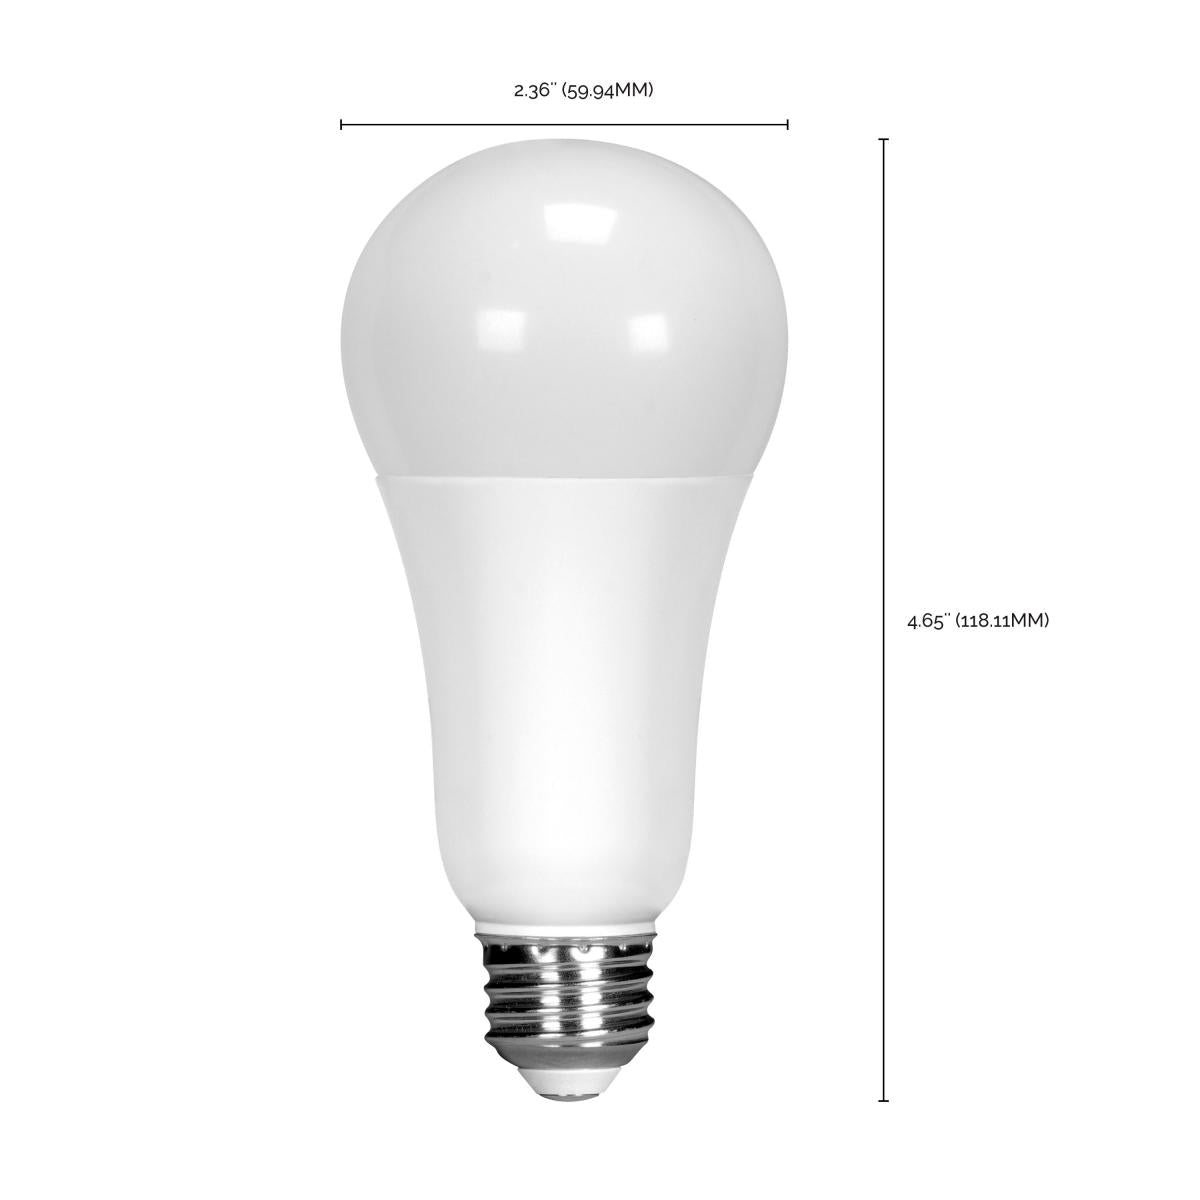 A19 LED Bulb, 100W Equivalent, 17 Watt, 1600 Lumens, 2700K, E26 Medium Base, Frosted Finish